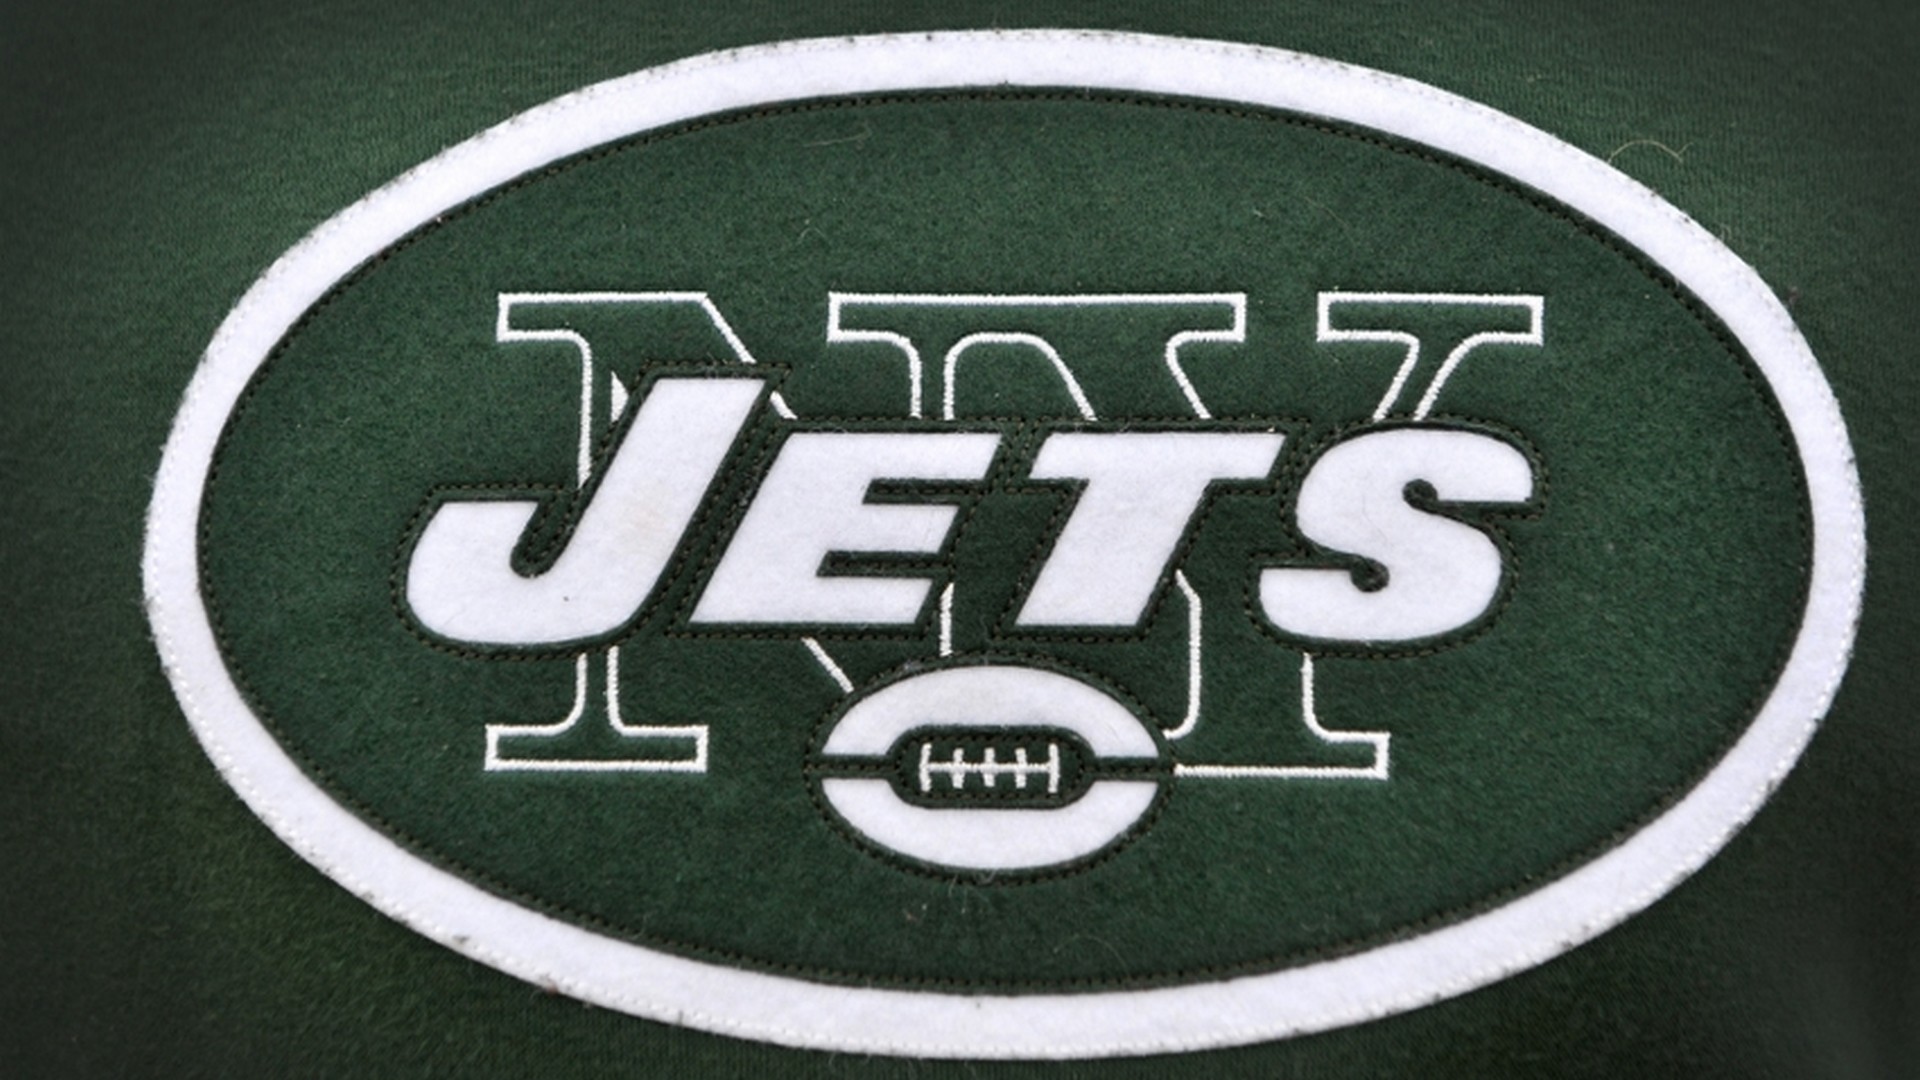 Windows Wallpaper New York Jets Nfl Football